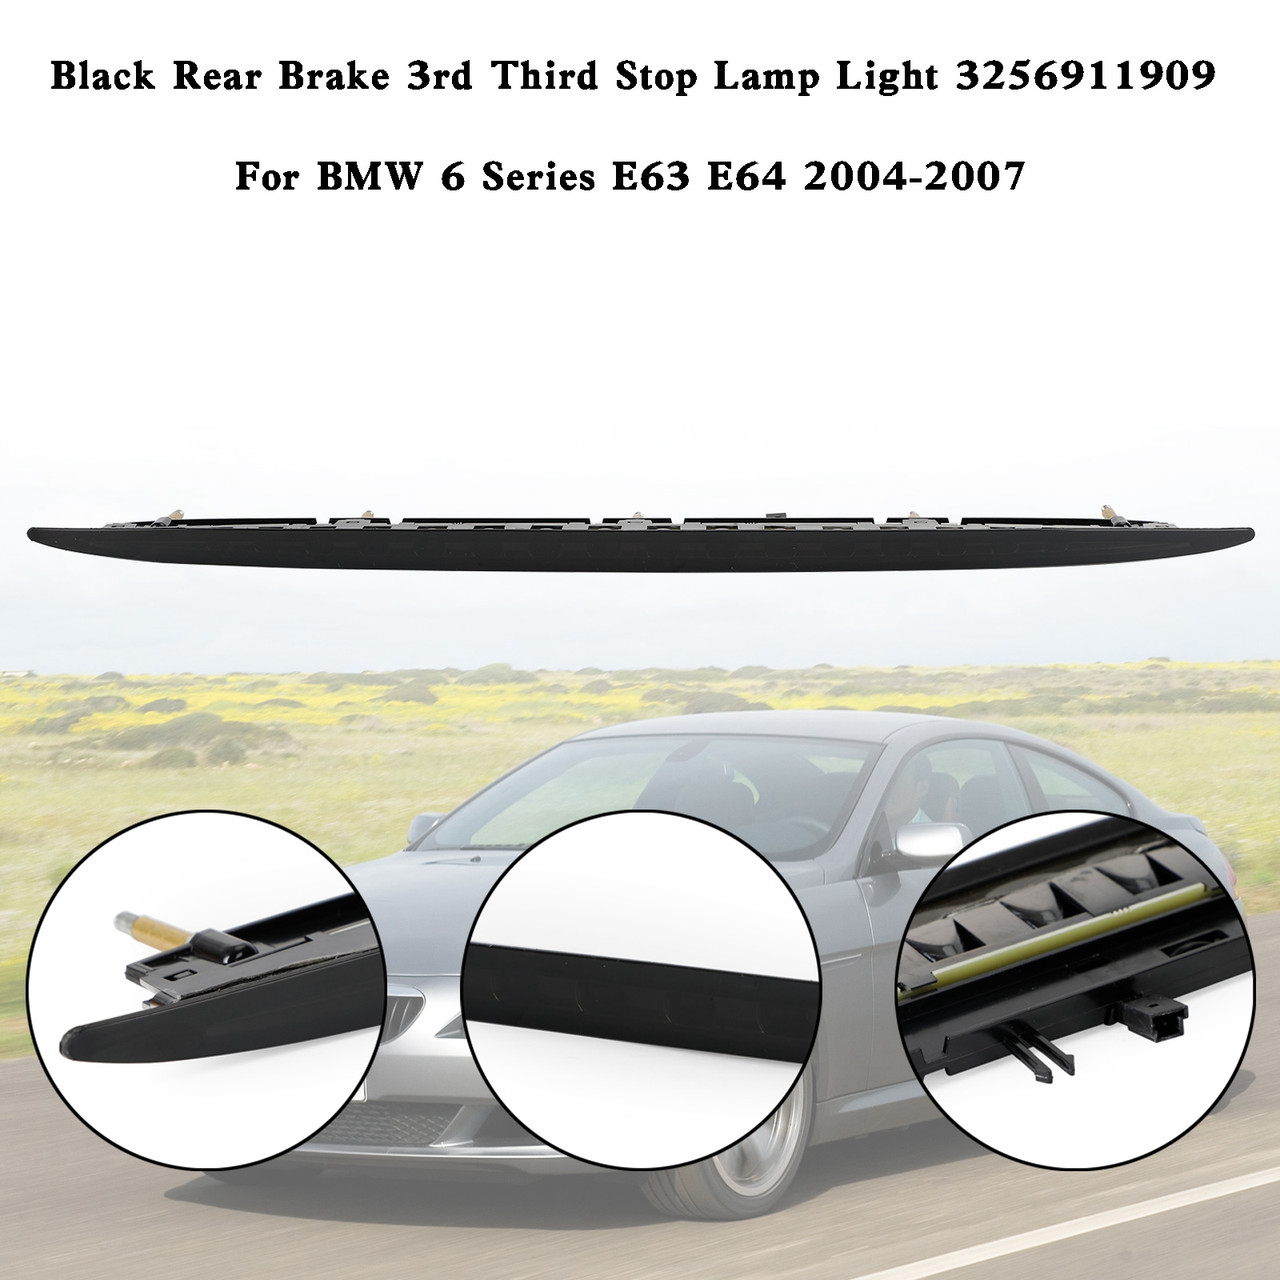 Rear Brake 3rd Third Stop Lamp Light 3256911909 For BMW 6 Series E63 E64 04-07 Black